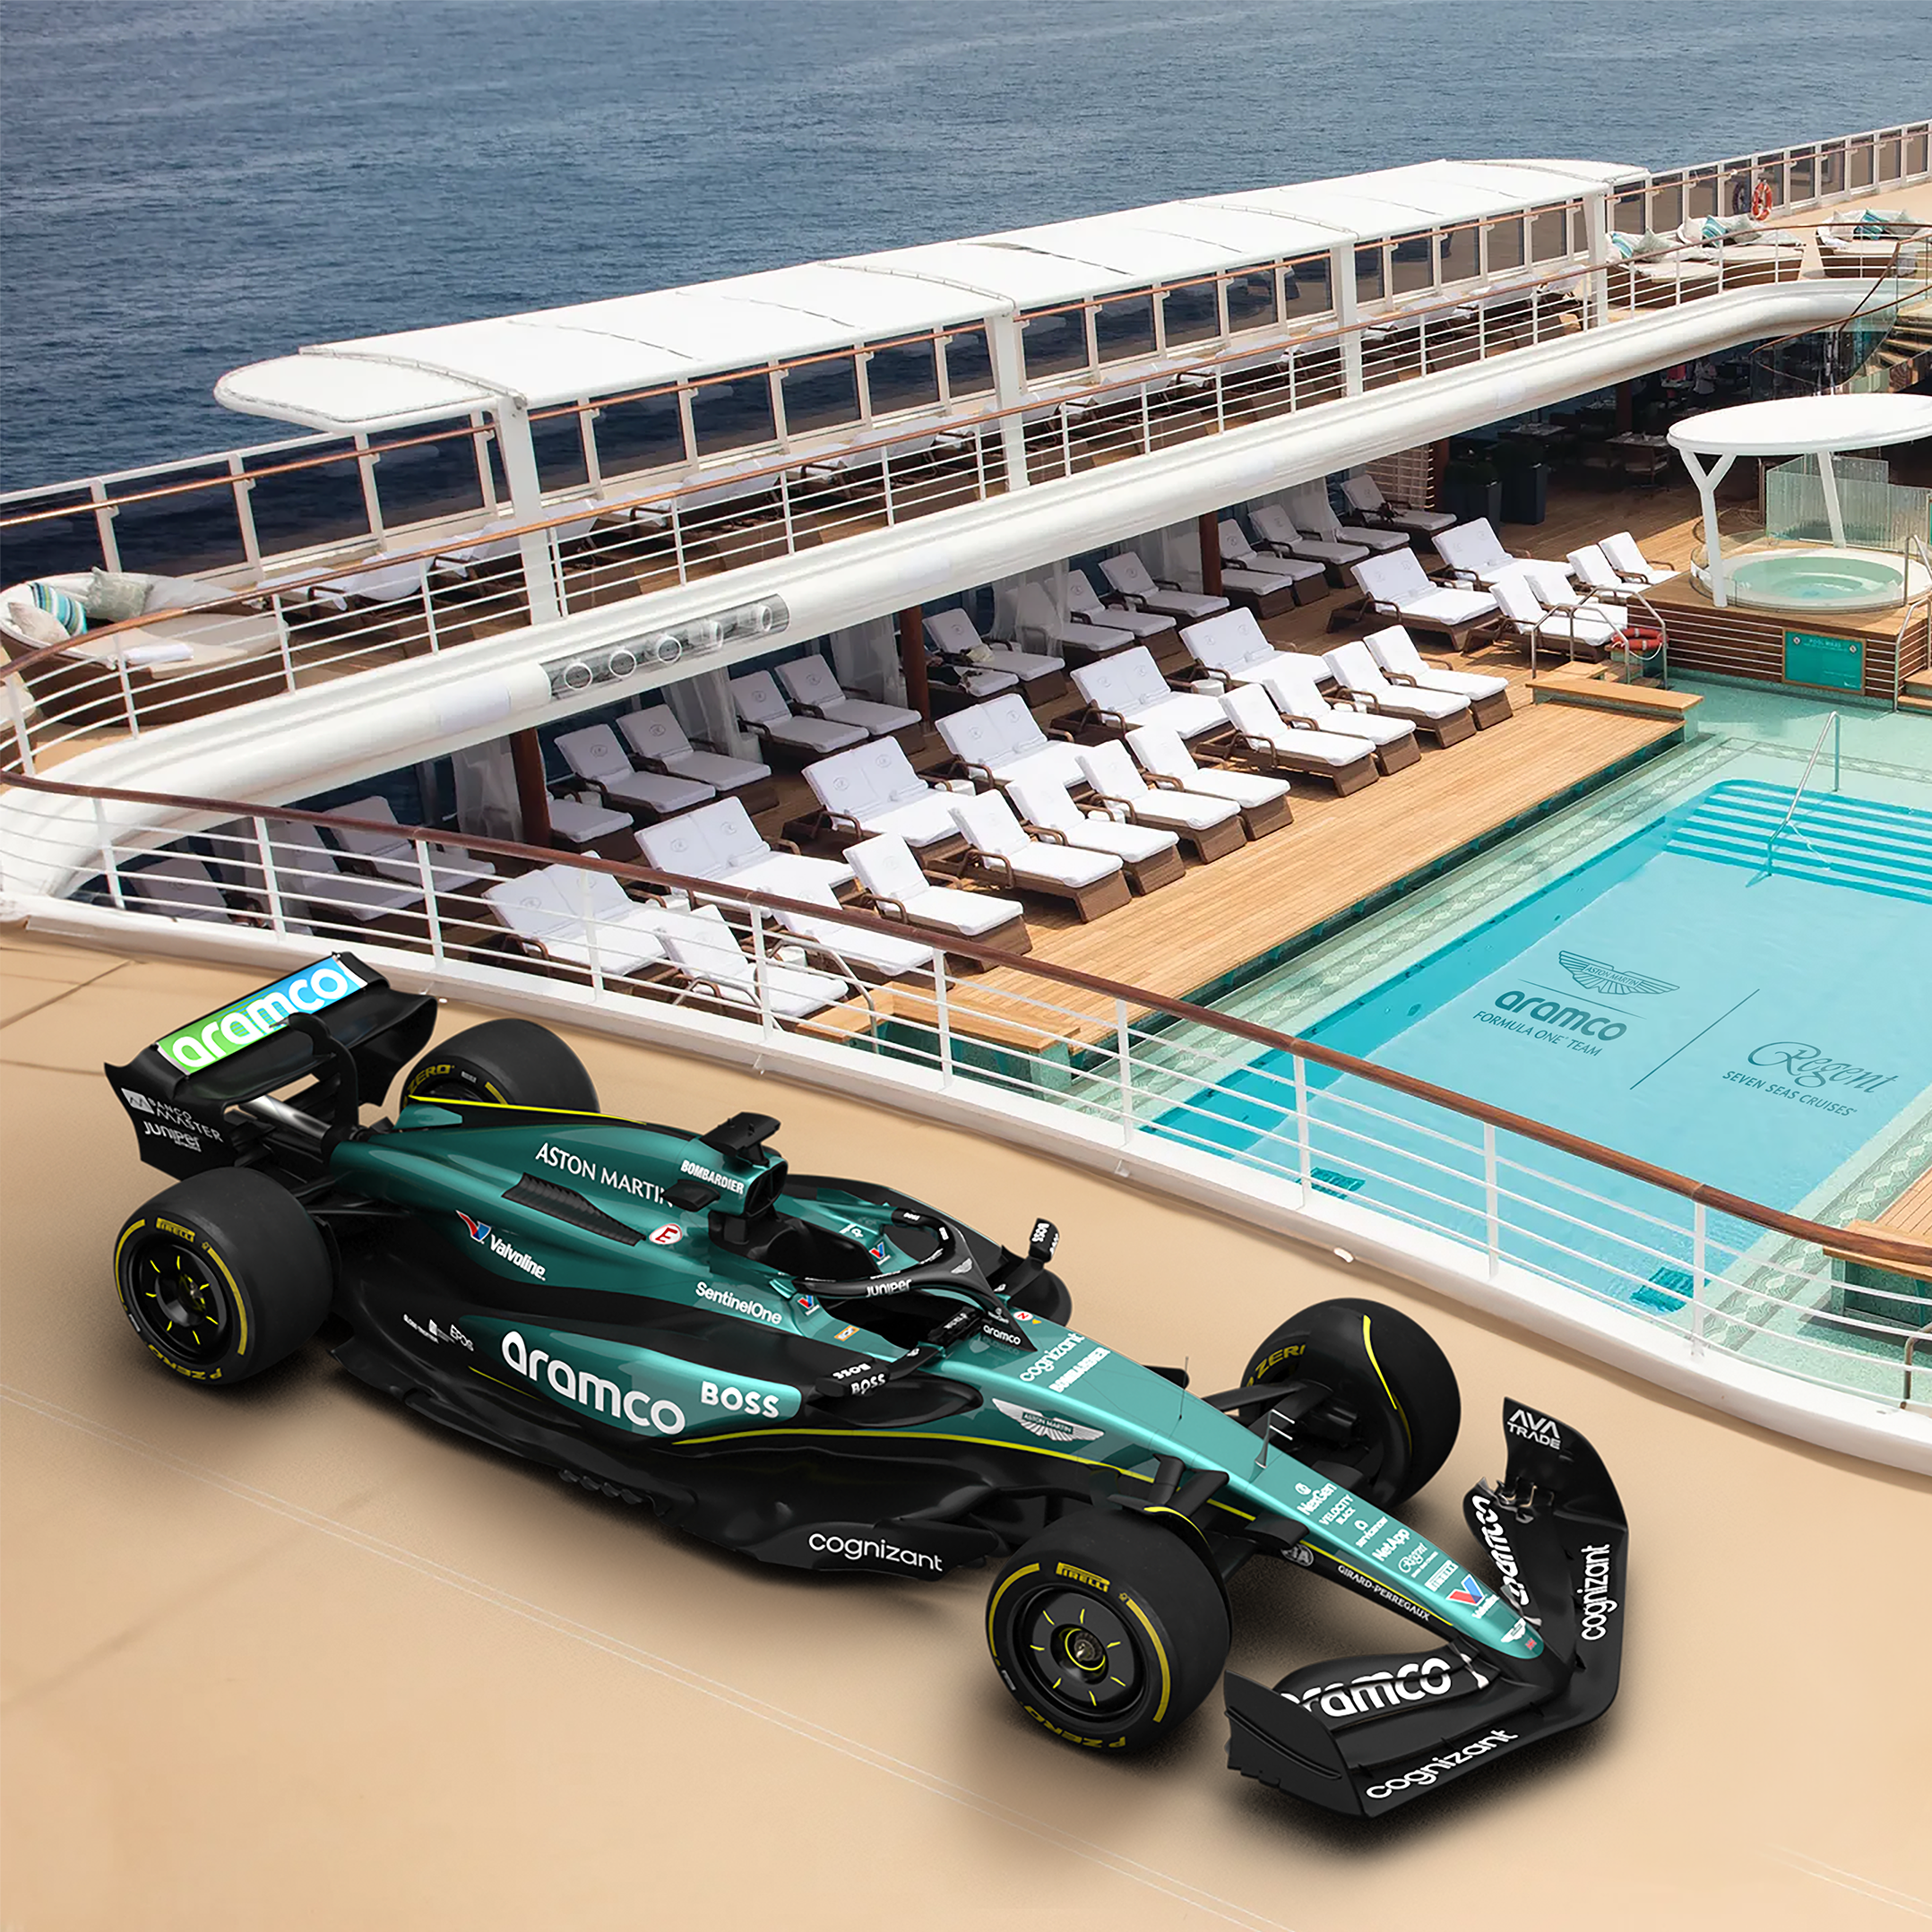 Formel 1 Auto von Aston Martin an Bord der Seven Seas Splendor